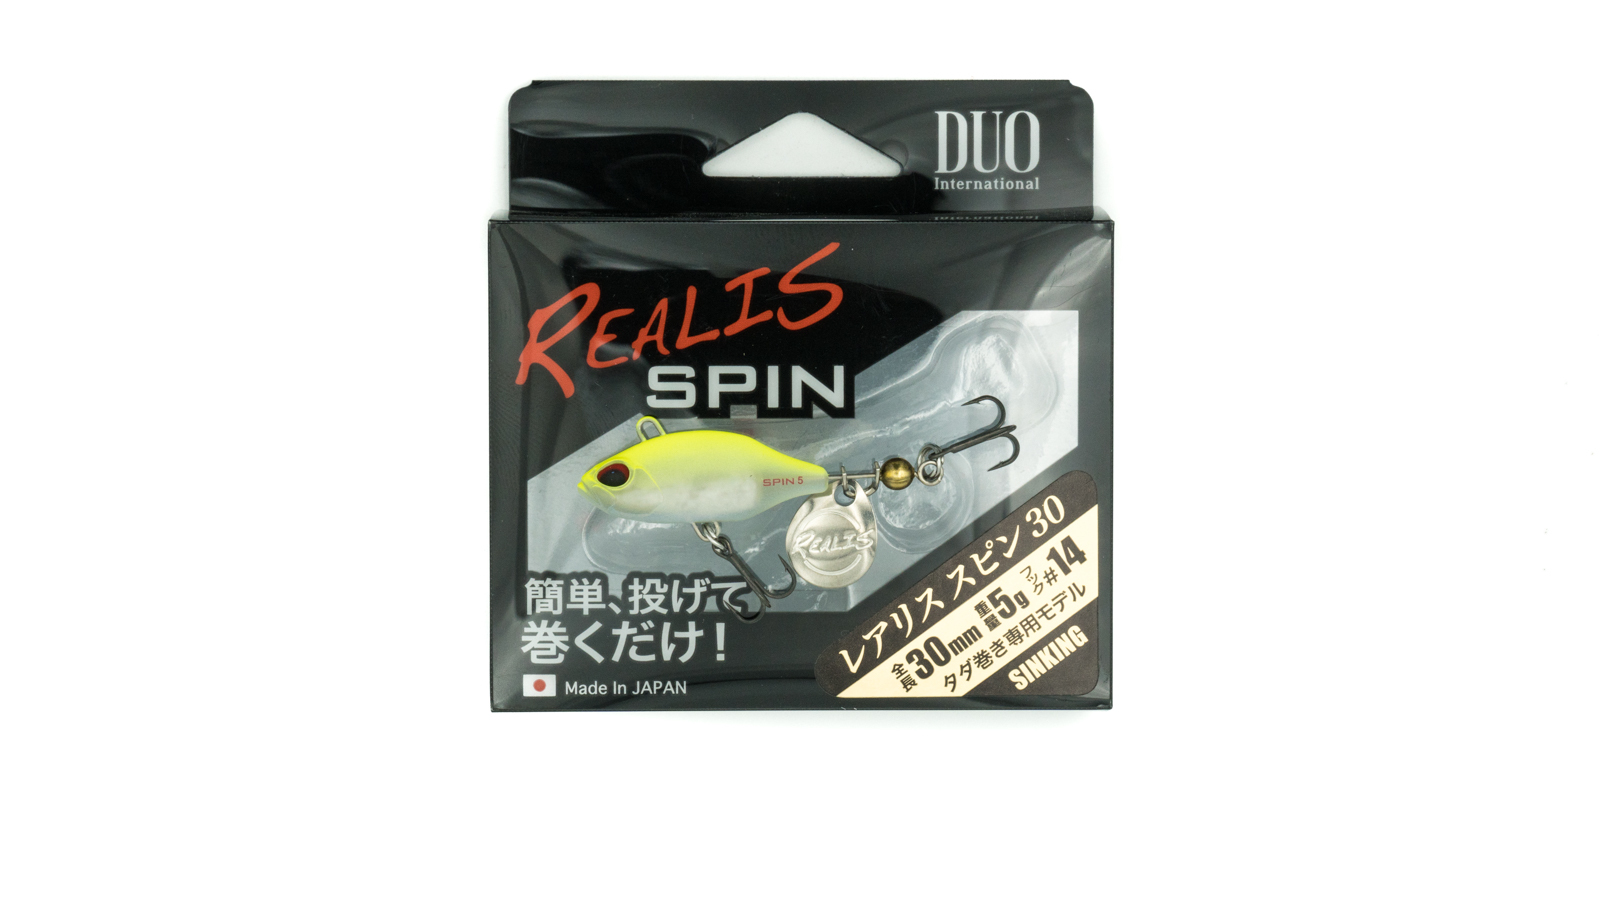 Duo Realis Spin. Duo Realis Spinner. Тейлспиннер Duo Realis Spin 35мм/7гр #sma0083 Red back Medallion. Тейлспиннер Duo Realis Spin 30мм/5гр #acc3225 mat Tiger II.